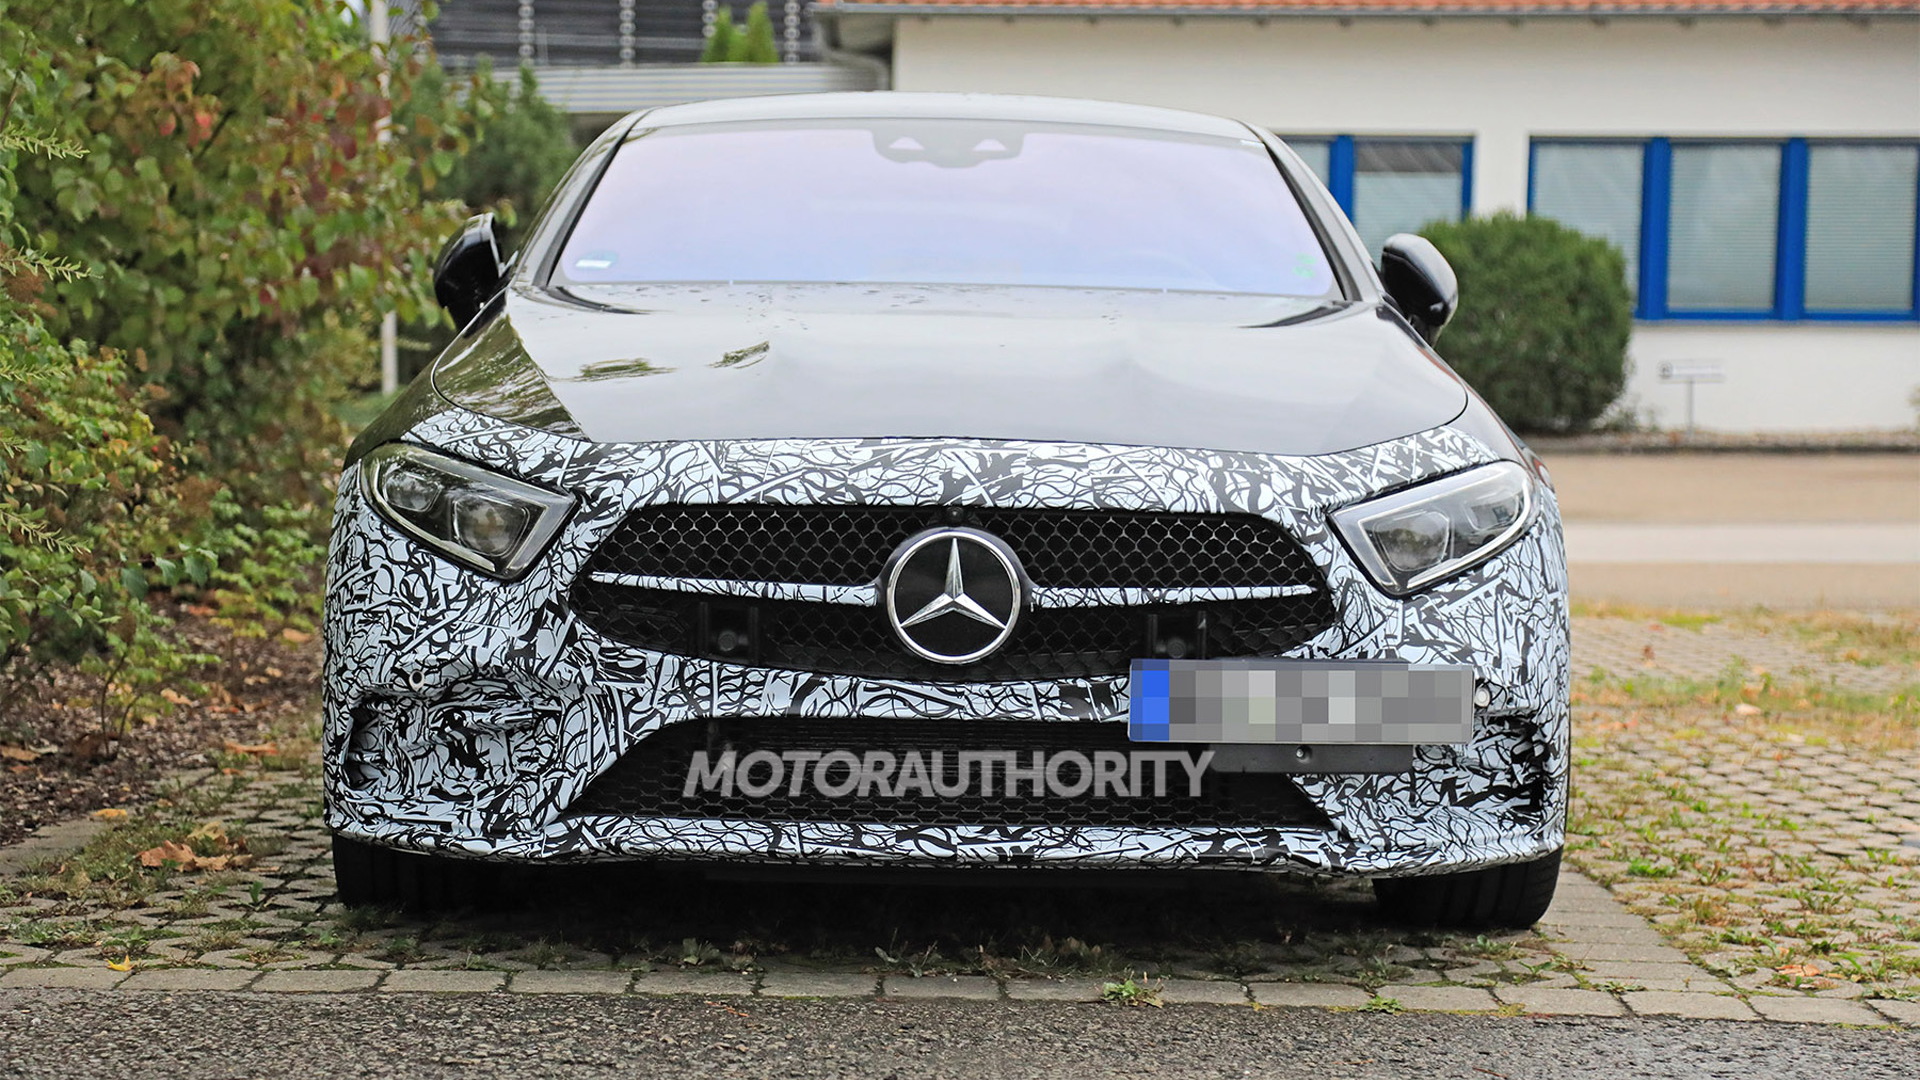 2022 Mercedes-AMG CLS53 facelift spy shots - Photo credit: S. Baldauf/SB-Medien